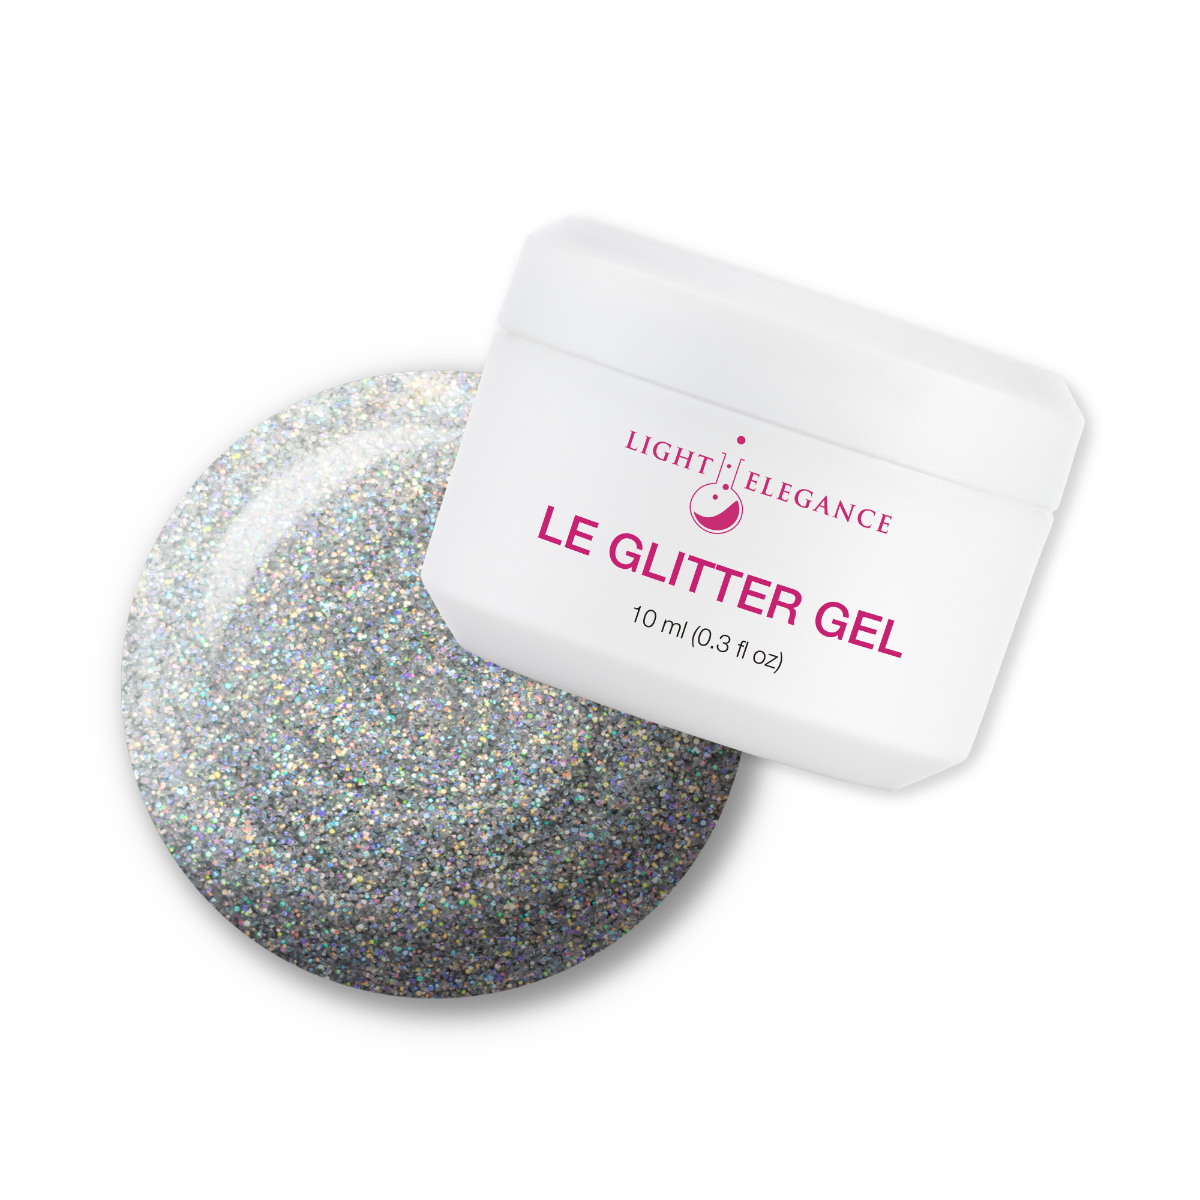 Light Elegance Glitter Gel - Disco :: New Packaging - Creata Beauty - Professional Beauty Products